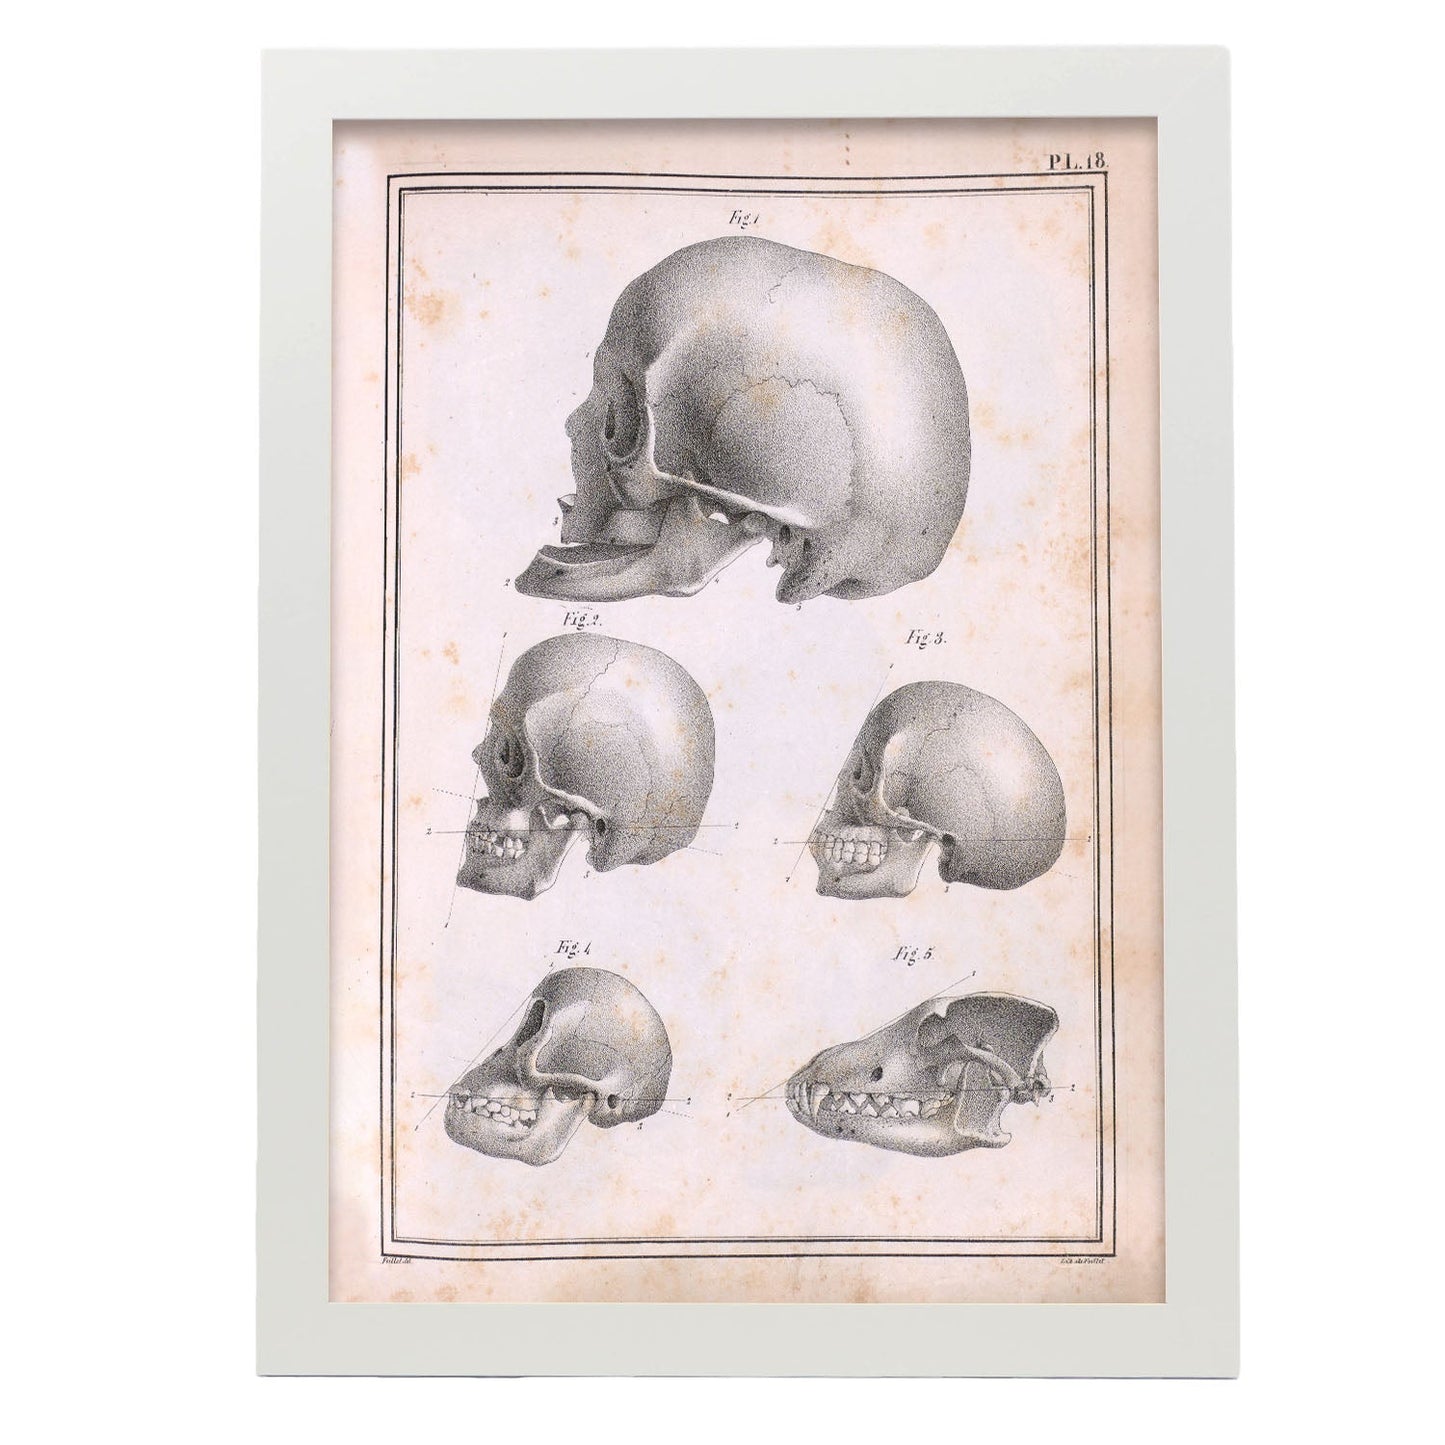 Paillou Skulls; geriatric, caucasiod and negroid adult, orangutan, and dog-Artwork-Nacnic-A3-Marco Blanco-Nacnic Estudio SL